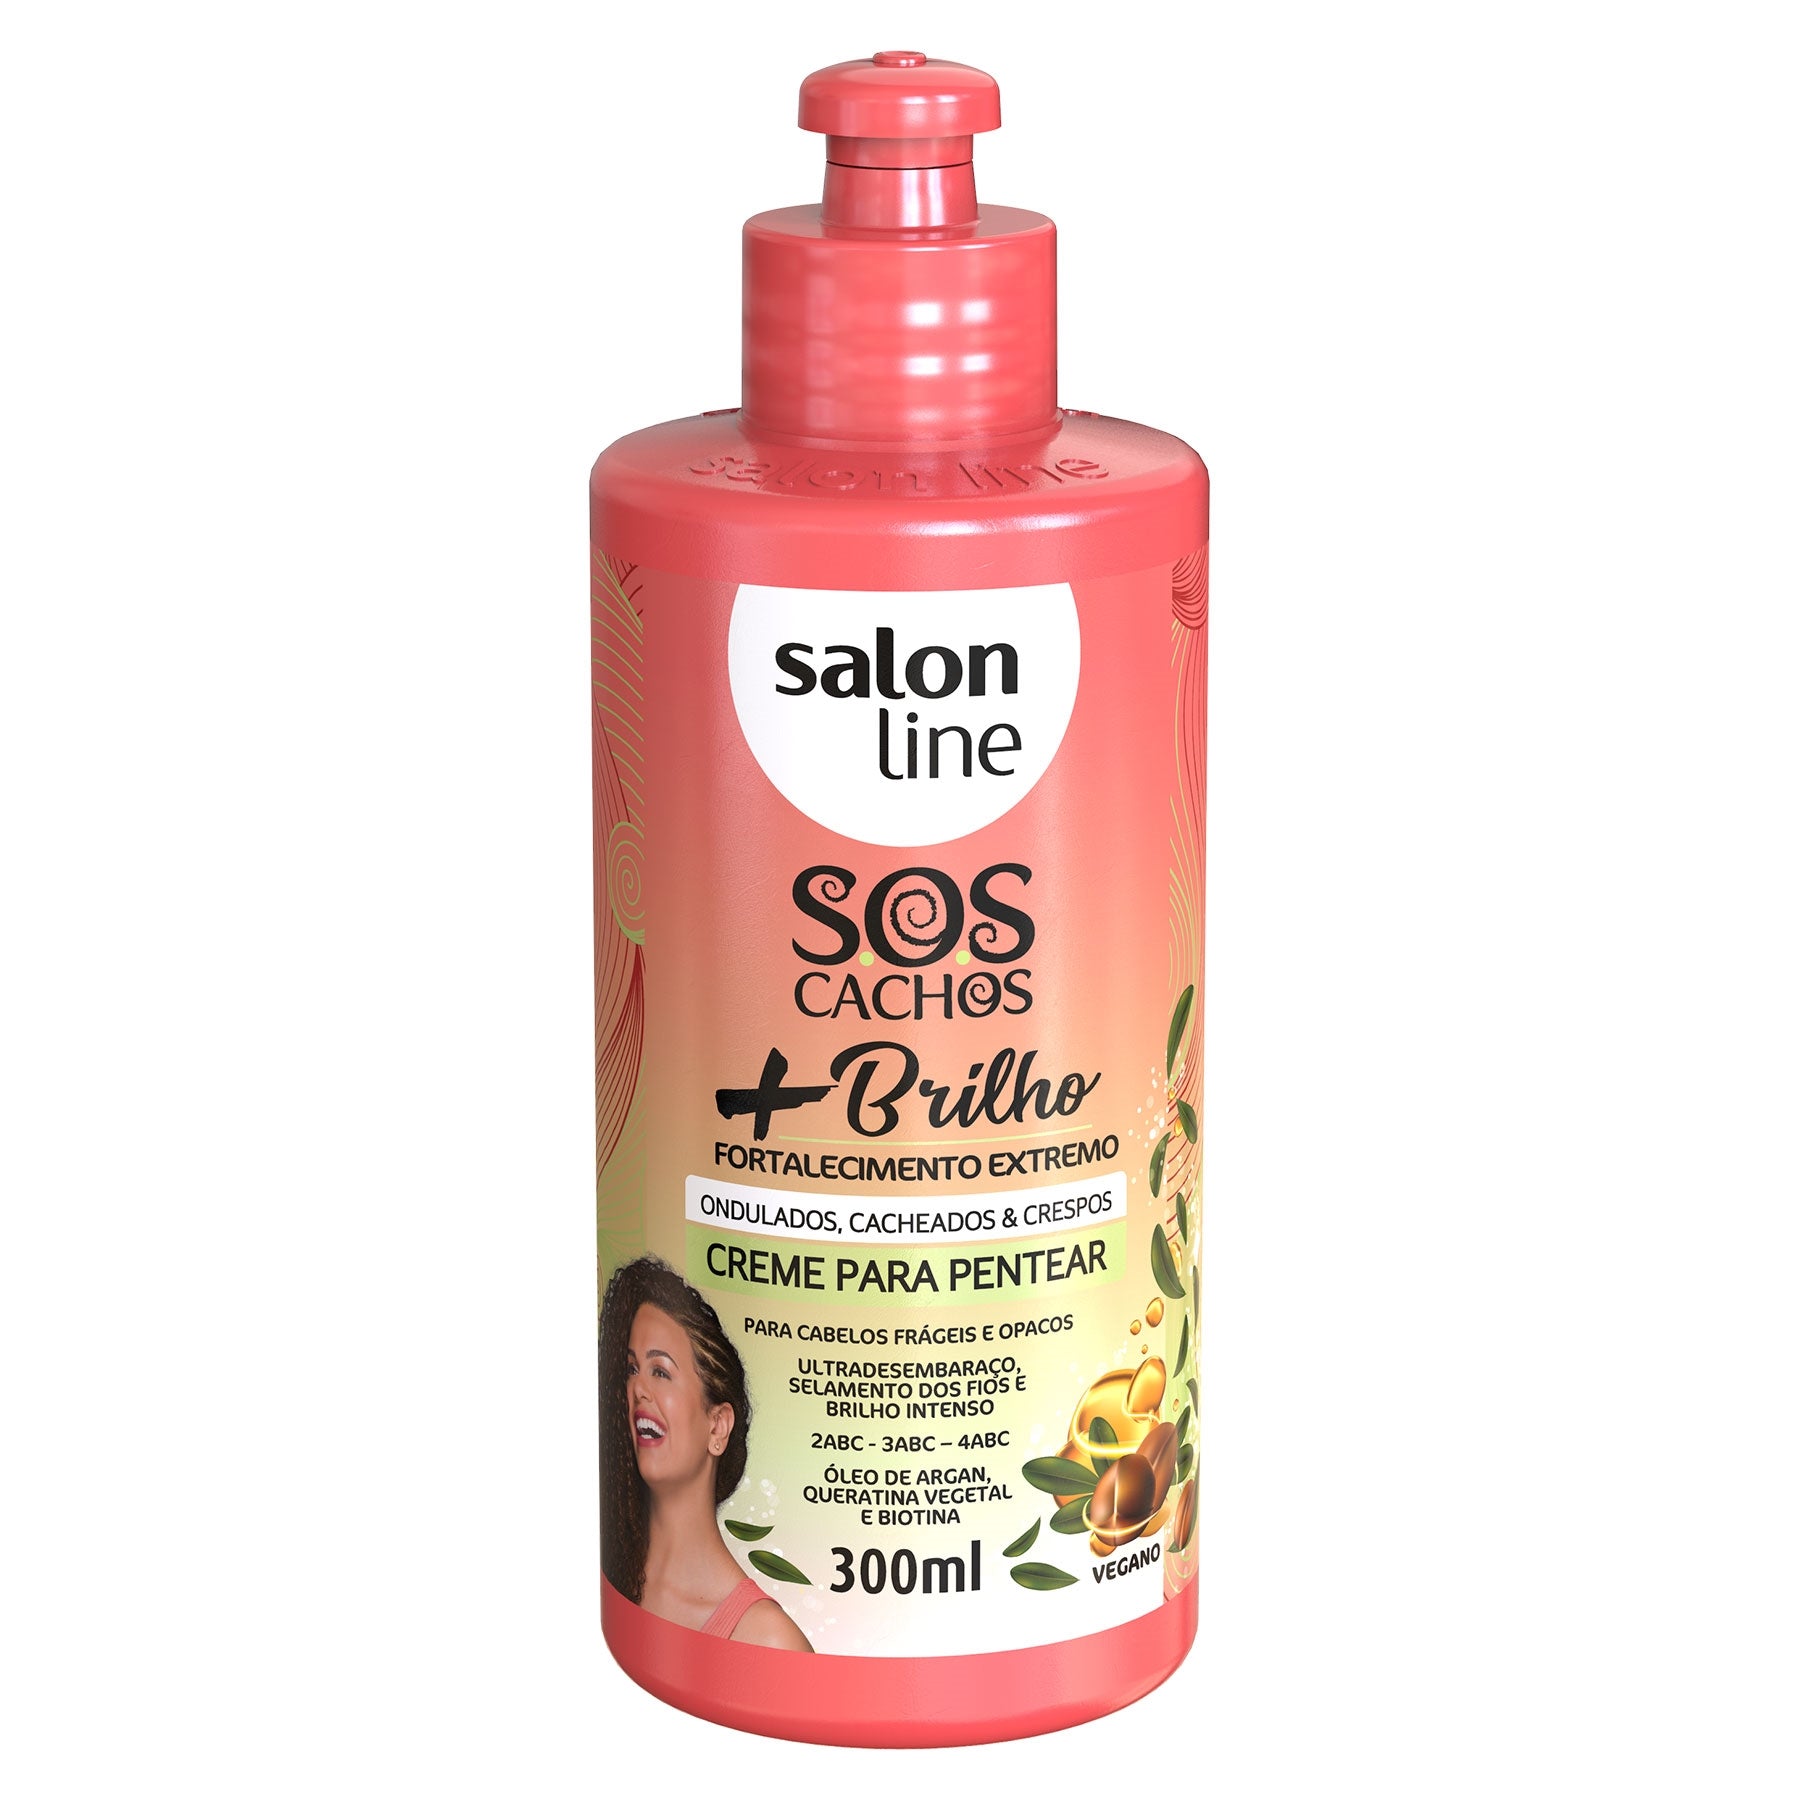 Salon Line SOS Cachos + Brilho Leave in 300ml